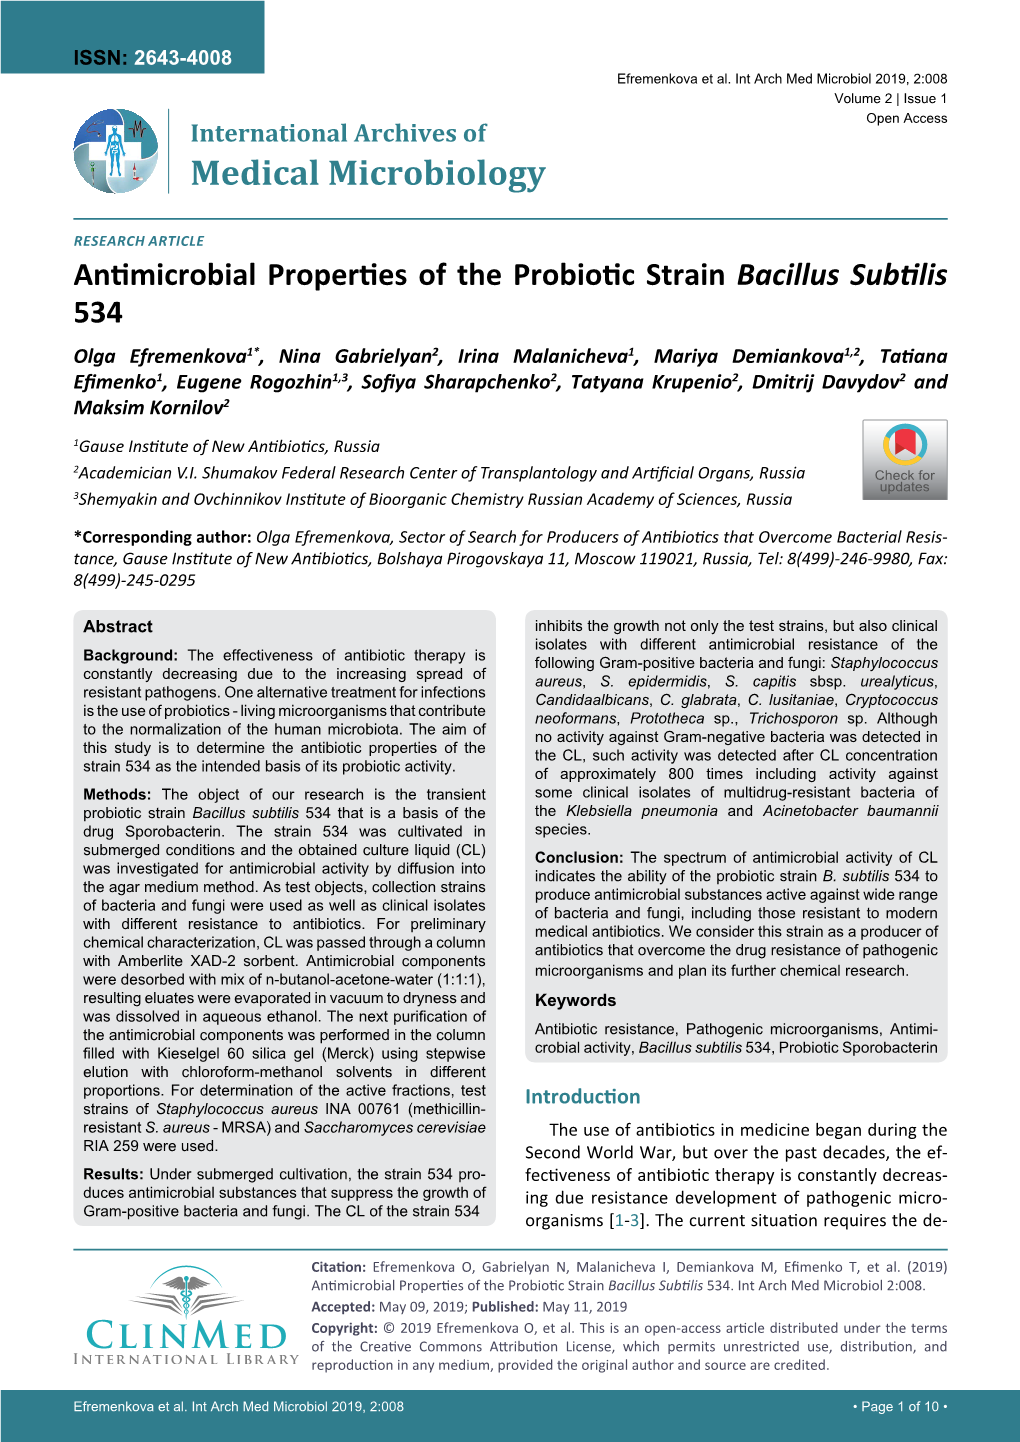 Antimicrobial Properties of the Probiotic Strain Bacillus Subfilis